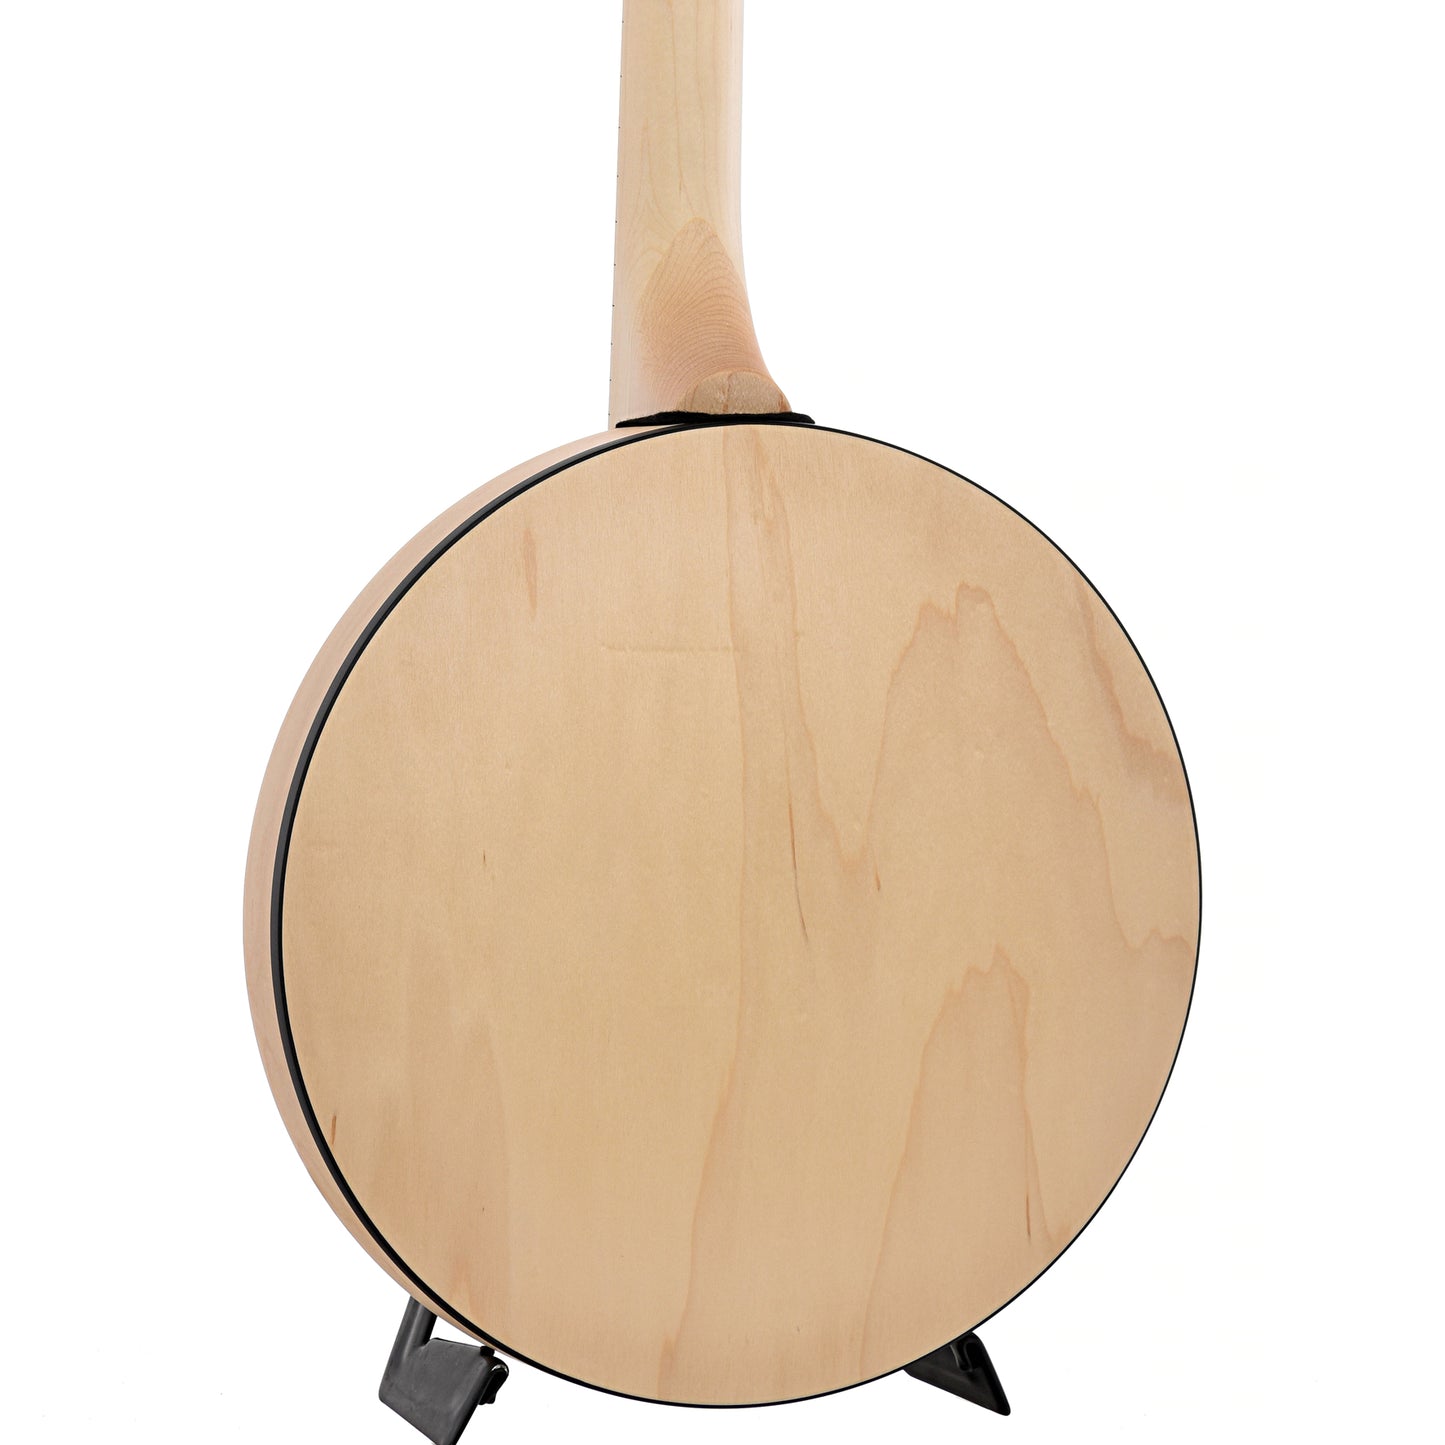 Body Back and Side of Deering Goodtime 2 Limited Edition Bronze Resonator Banjo, Shopworn